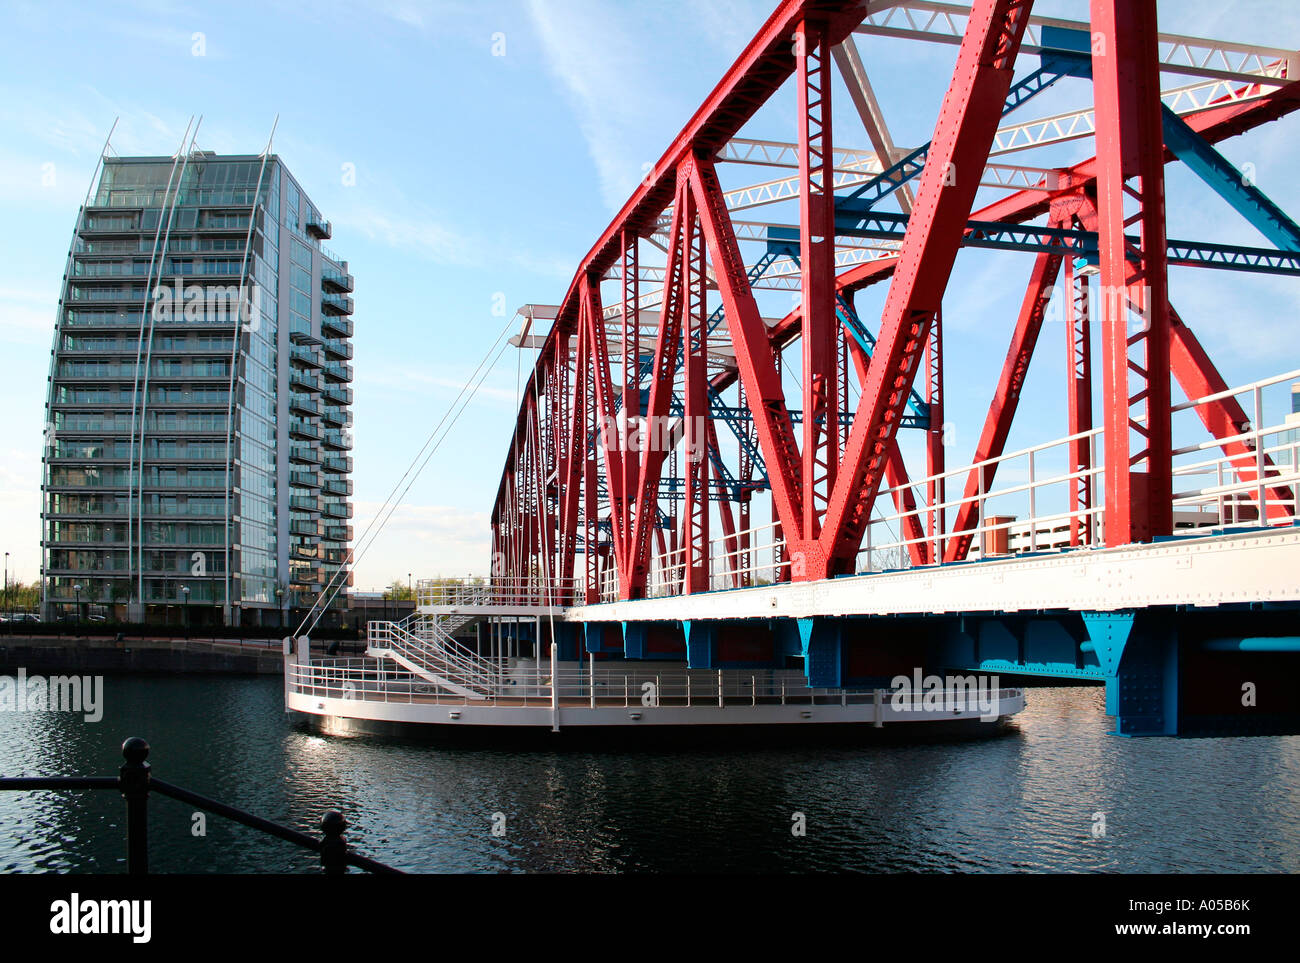 Detroit Bridge and apartments, Salford Quays, Manchester, UK Stock Photo